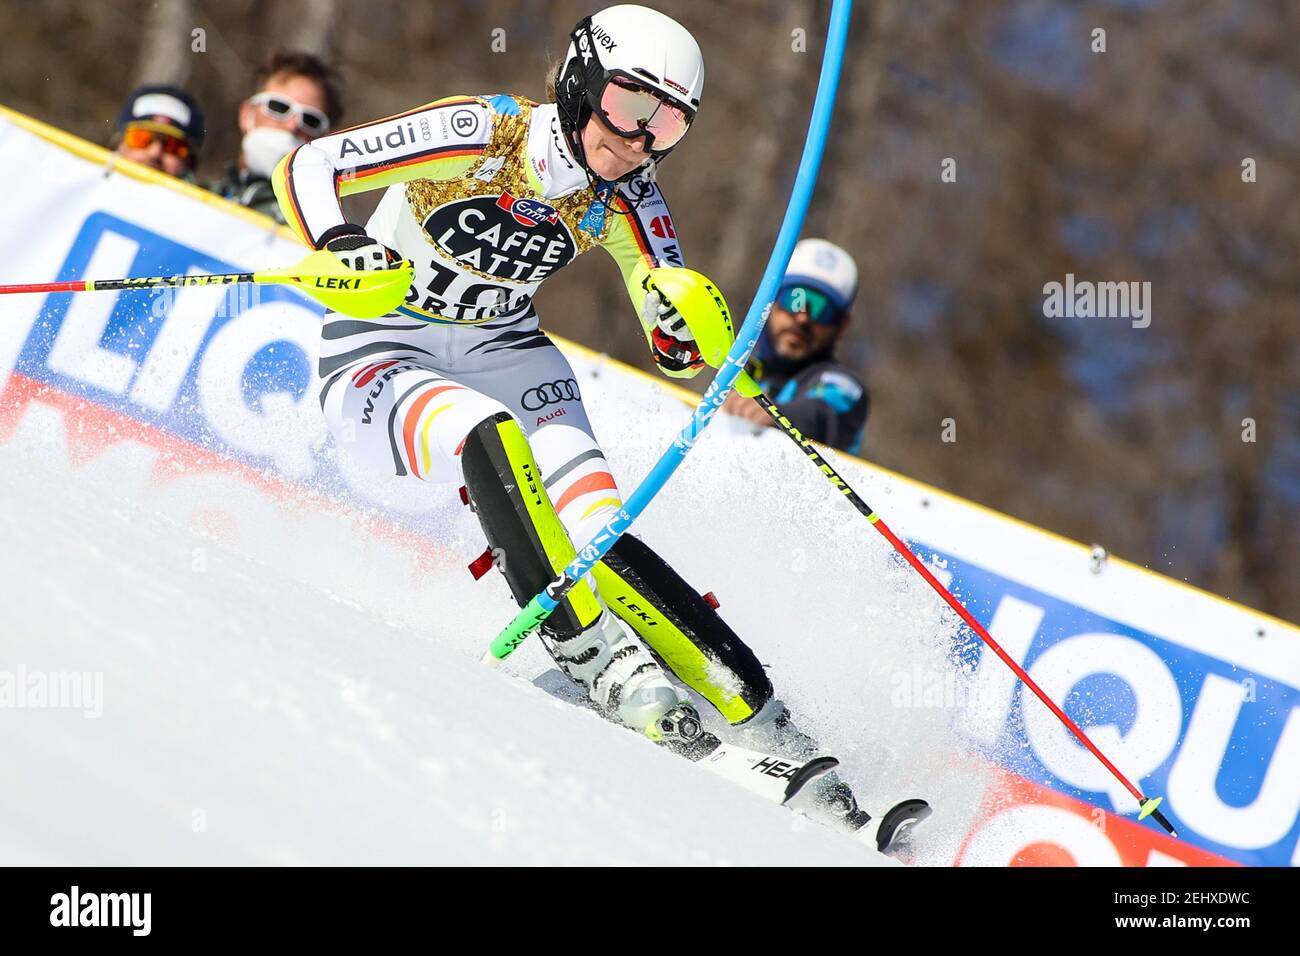 Lena DUERR (GER) during 2021 FIS Alpine World SKI Championships - Slalom - Women, alpine ski race in Cortina (BL), Italy